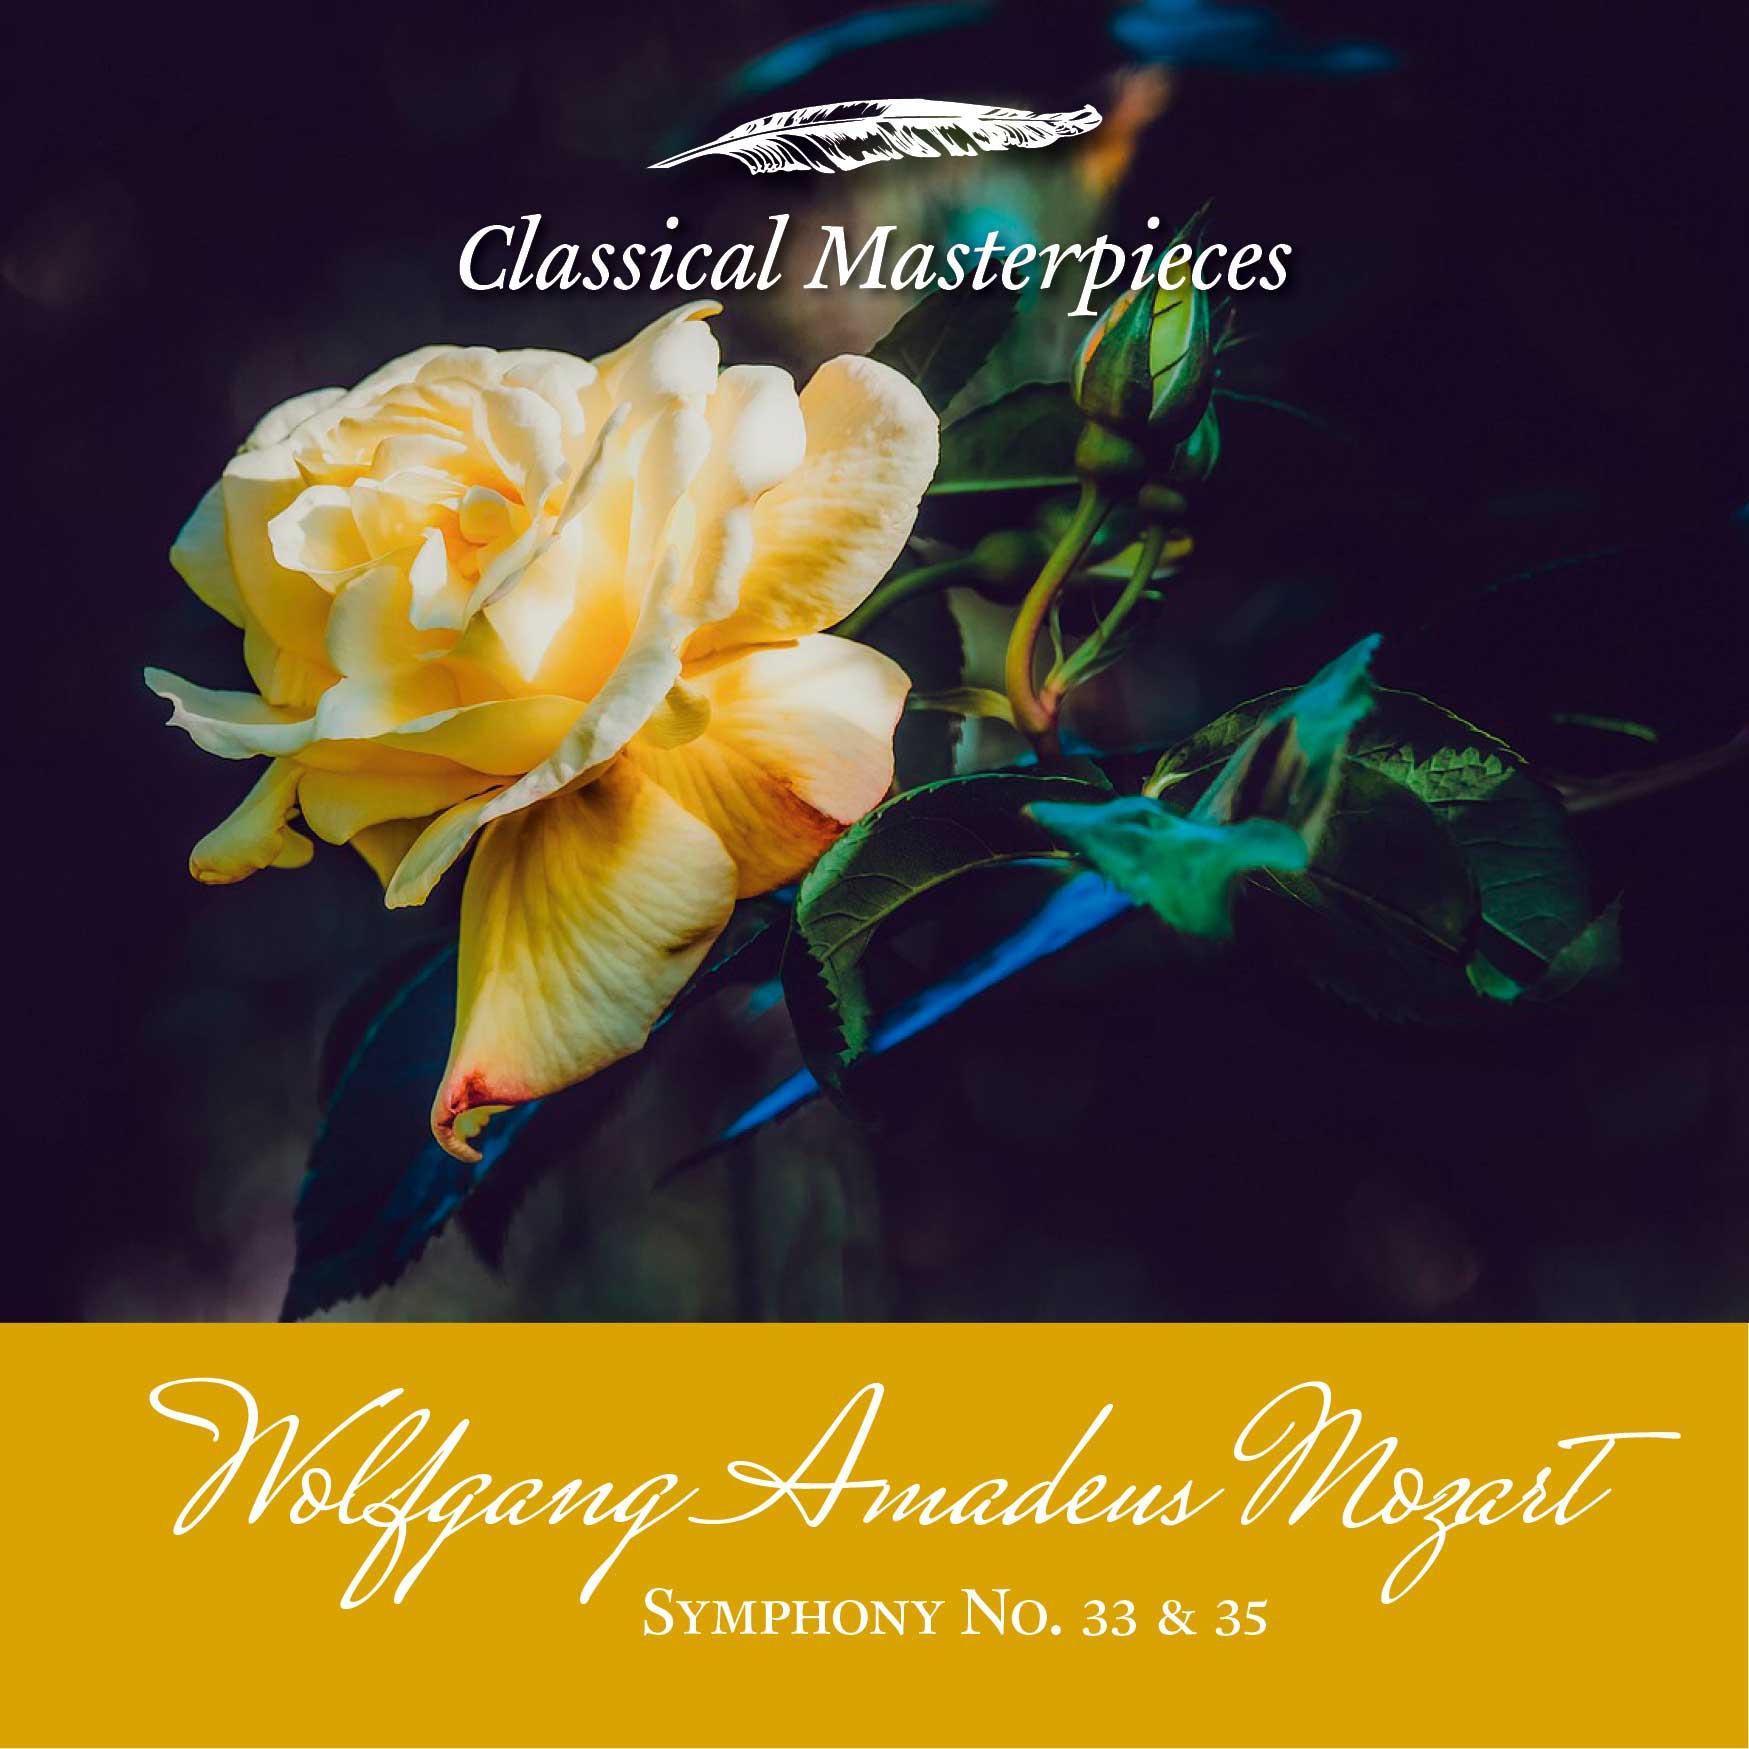 Wolfgang Amadeus Mozart Symphony No. 33 &35 "Haffner"